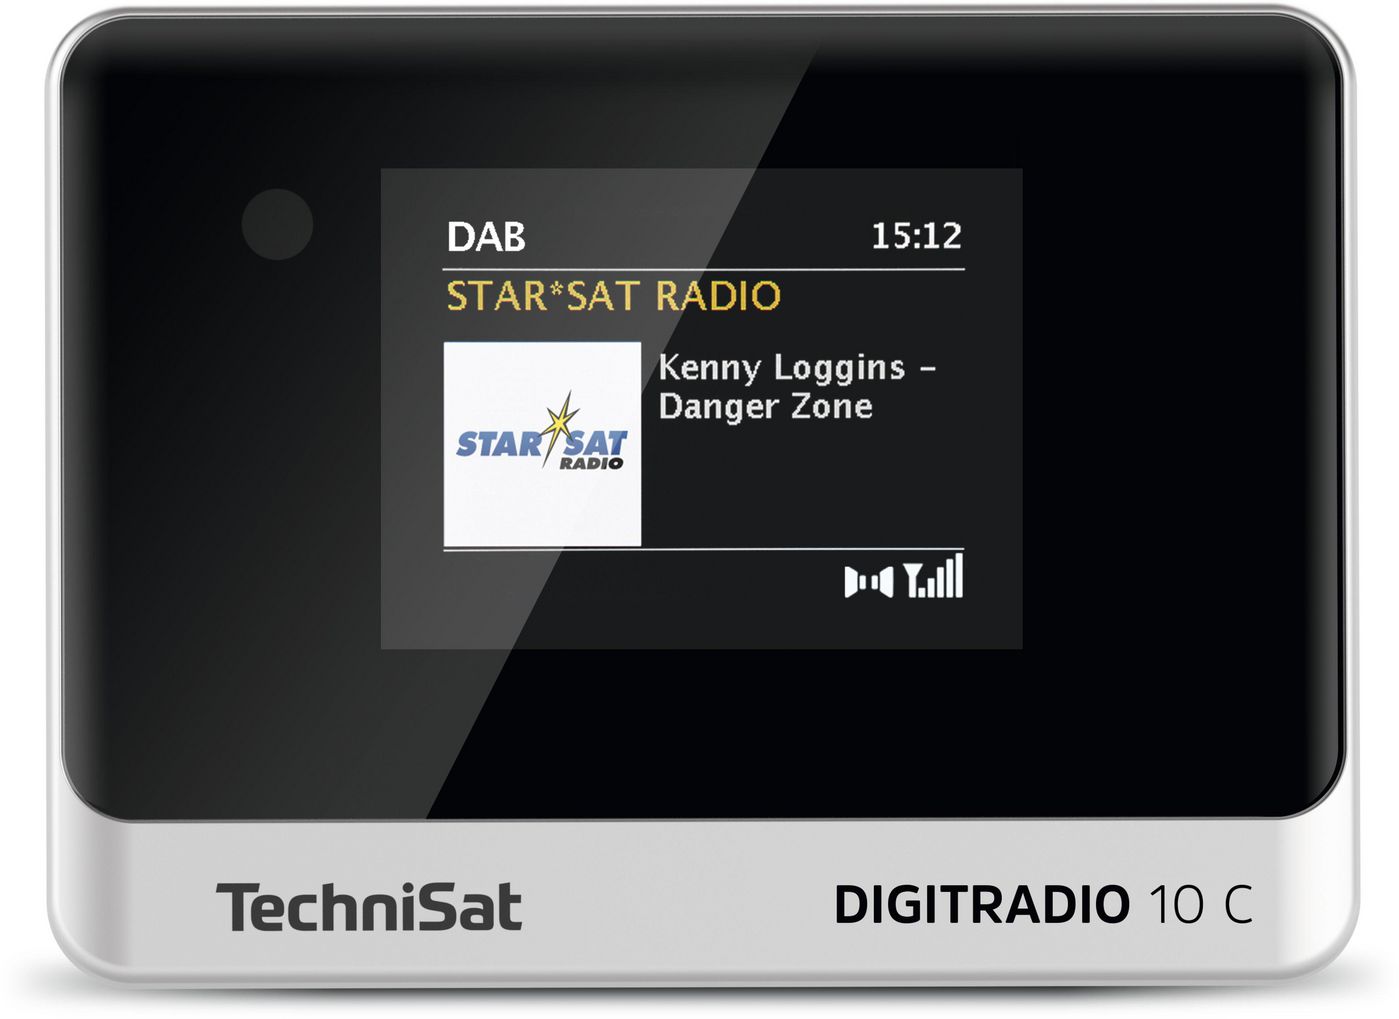 Technisat 00003945 W128262661 Digitradio 10 C Personal 